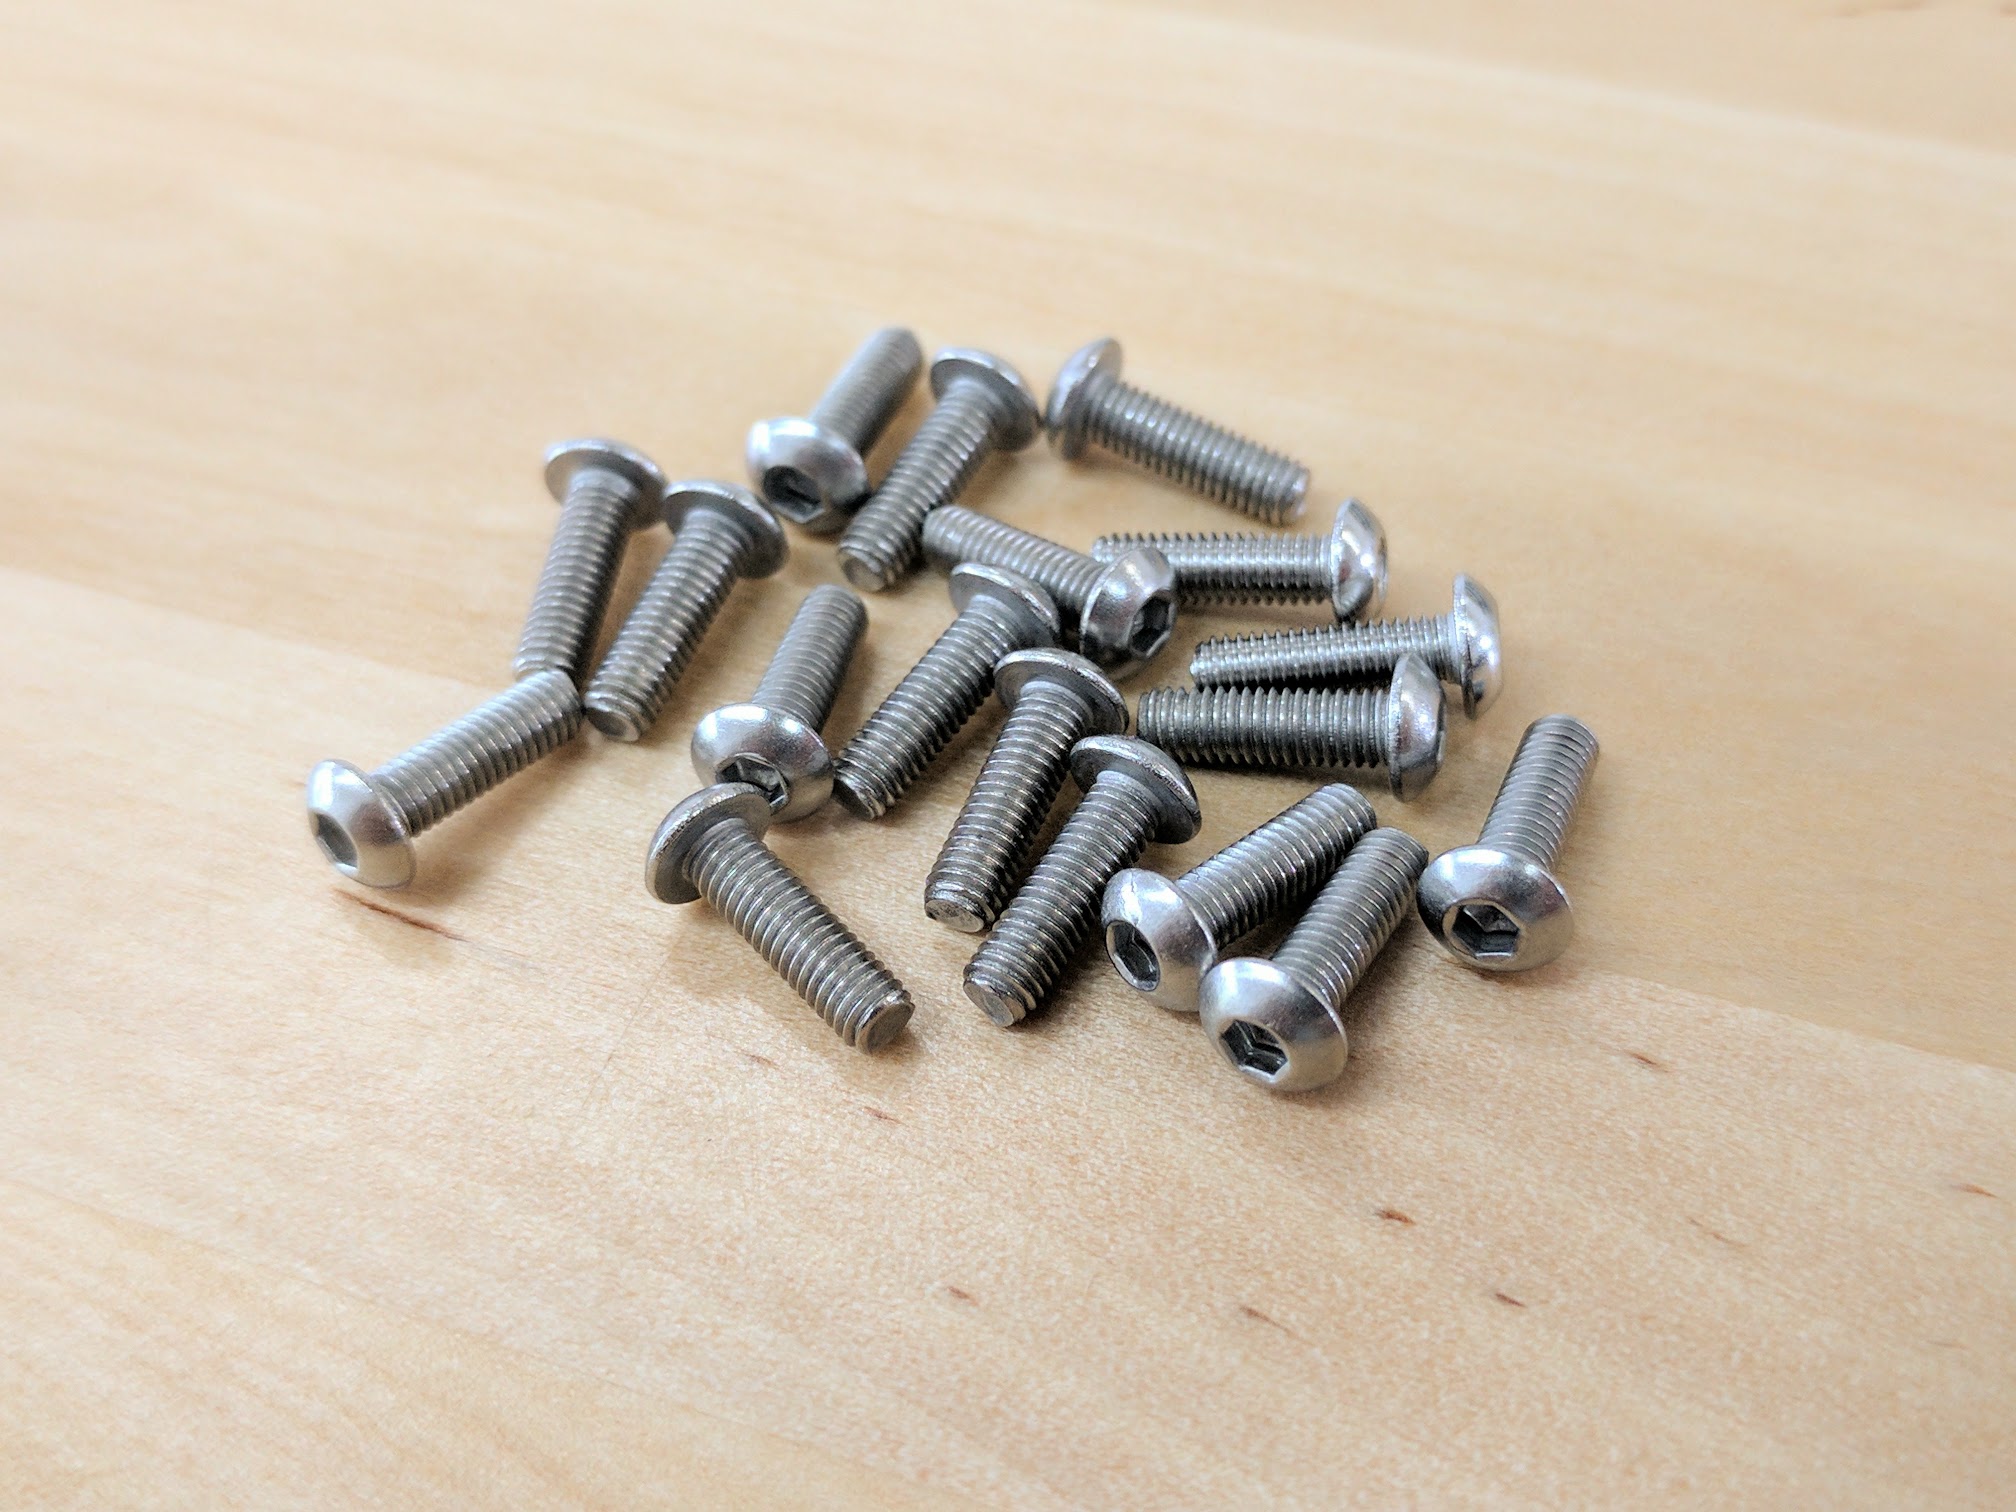 M3x12 screws